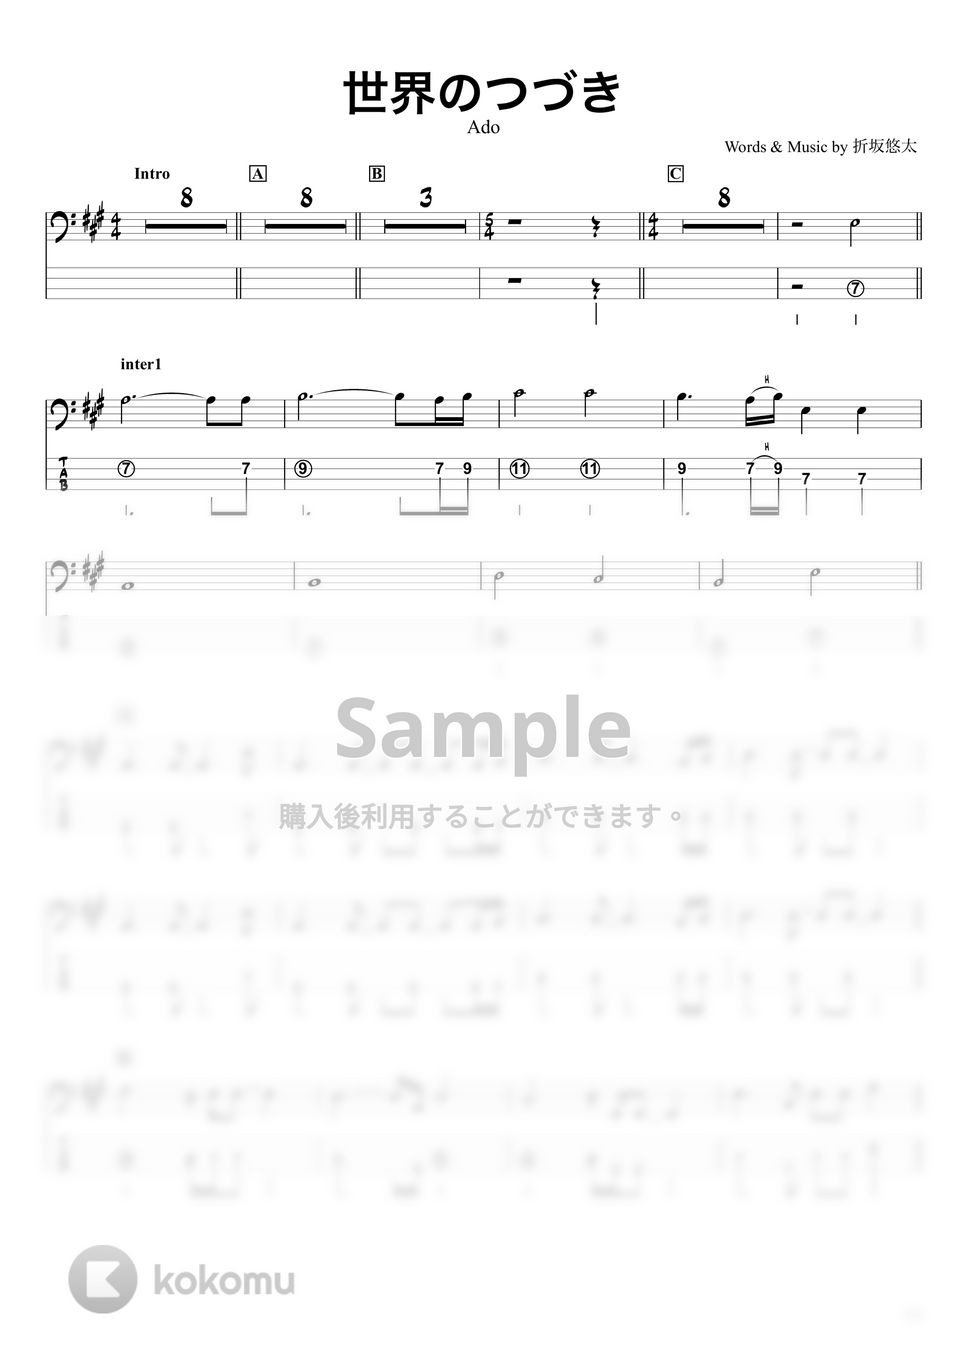 Ado - 世界のつづき (ベースTAB譜☆4弦ベース対応) by swbass